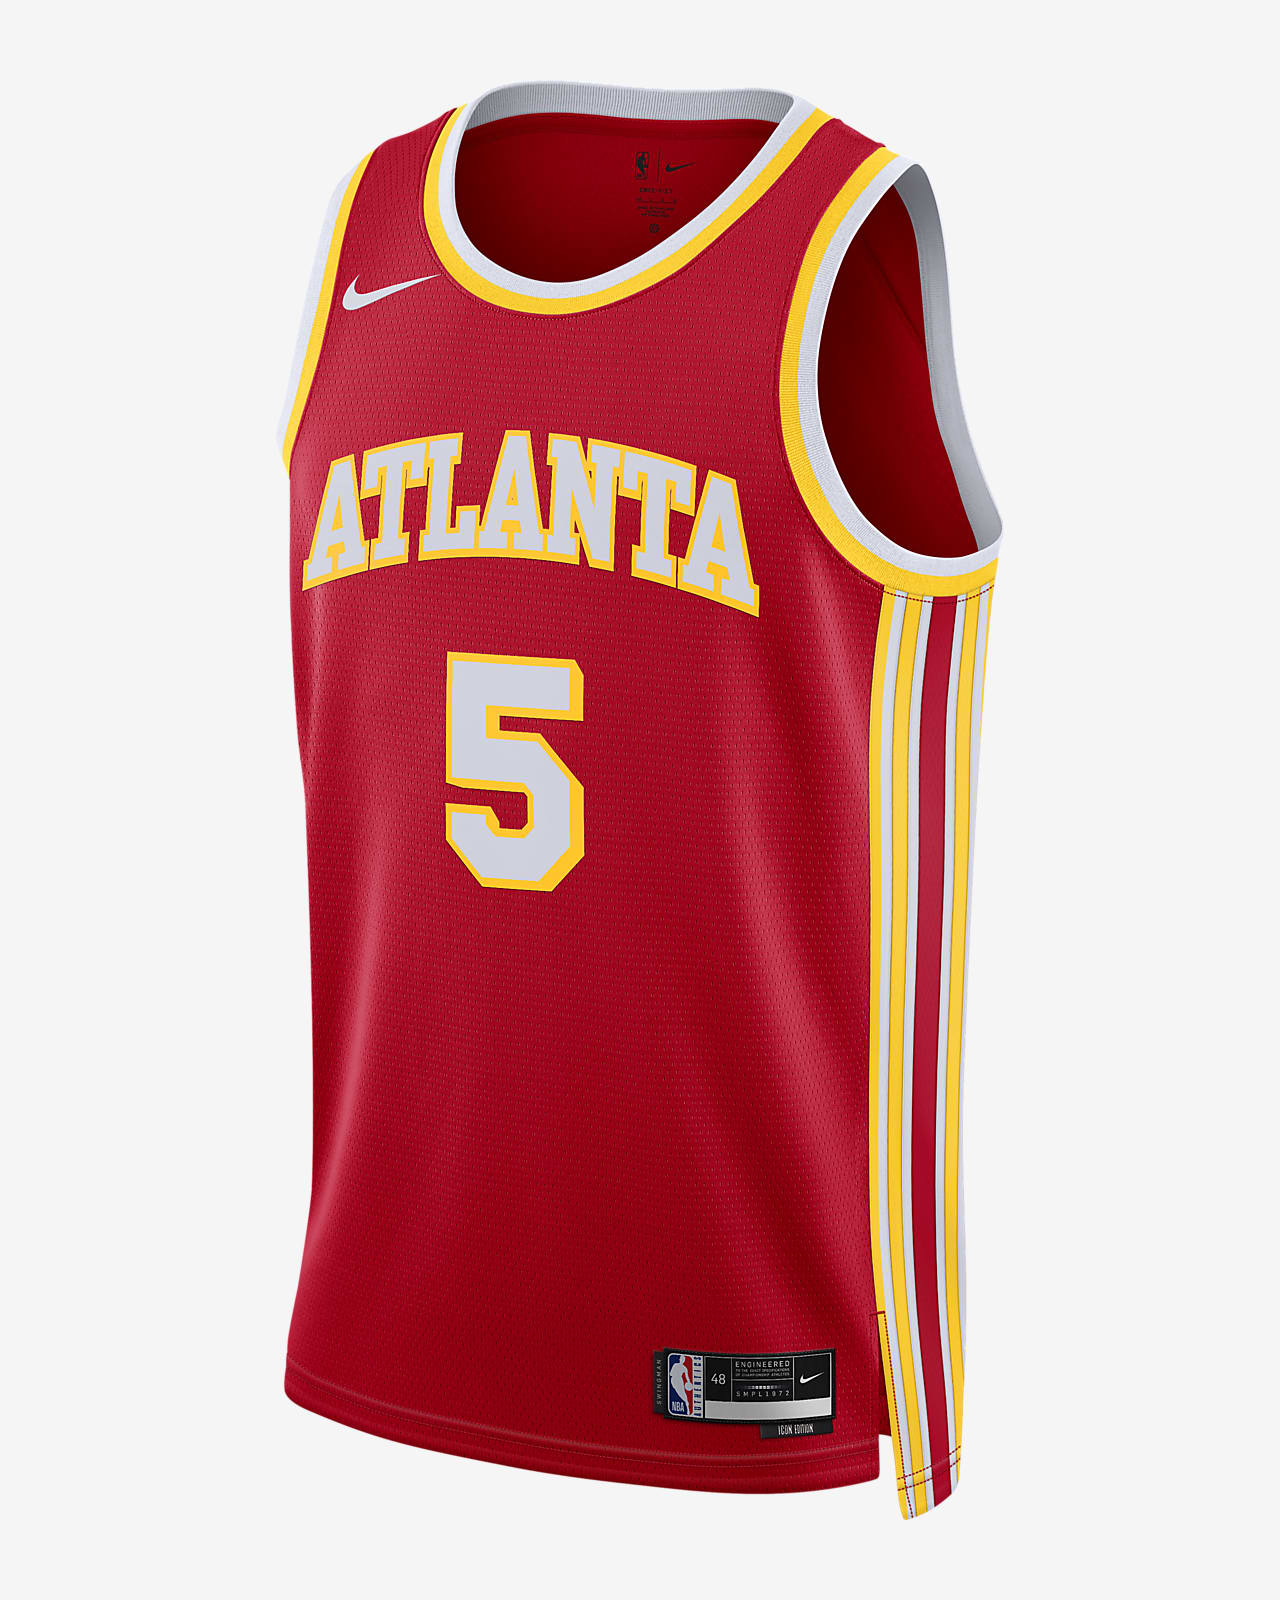 Atlanta Hawks Clothing.